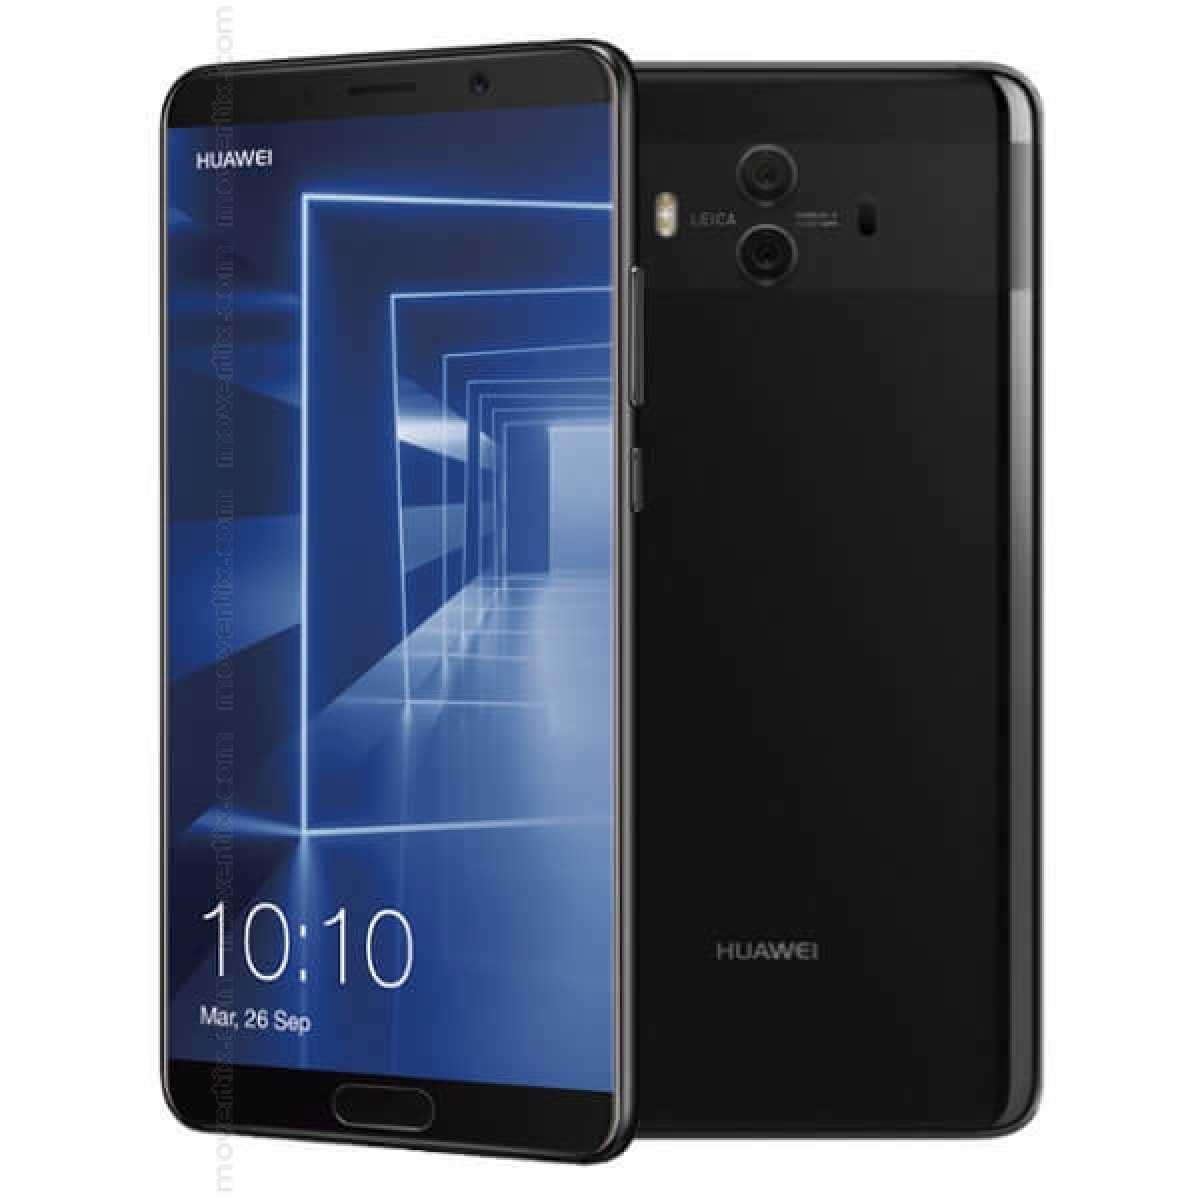  Huawei Mate 10  Dual SIM Black 64GB and 4GB RAM 